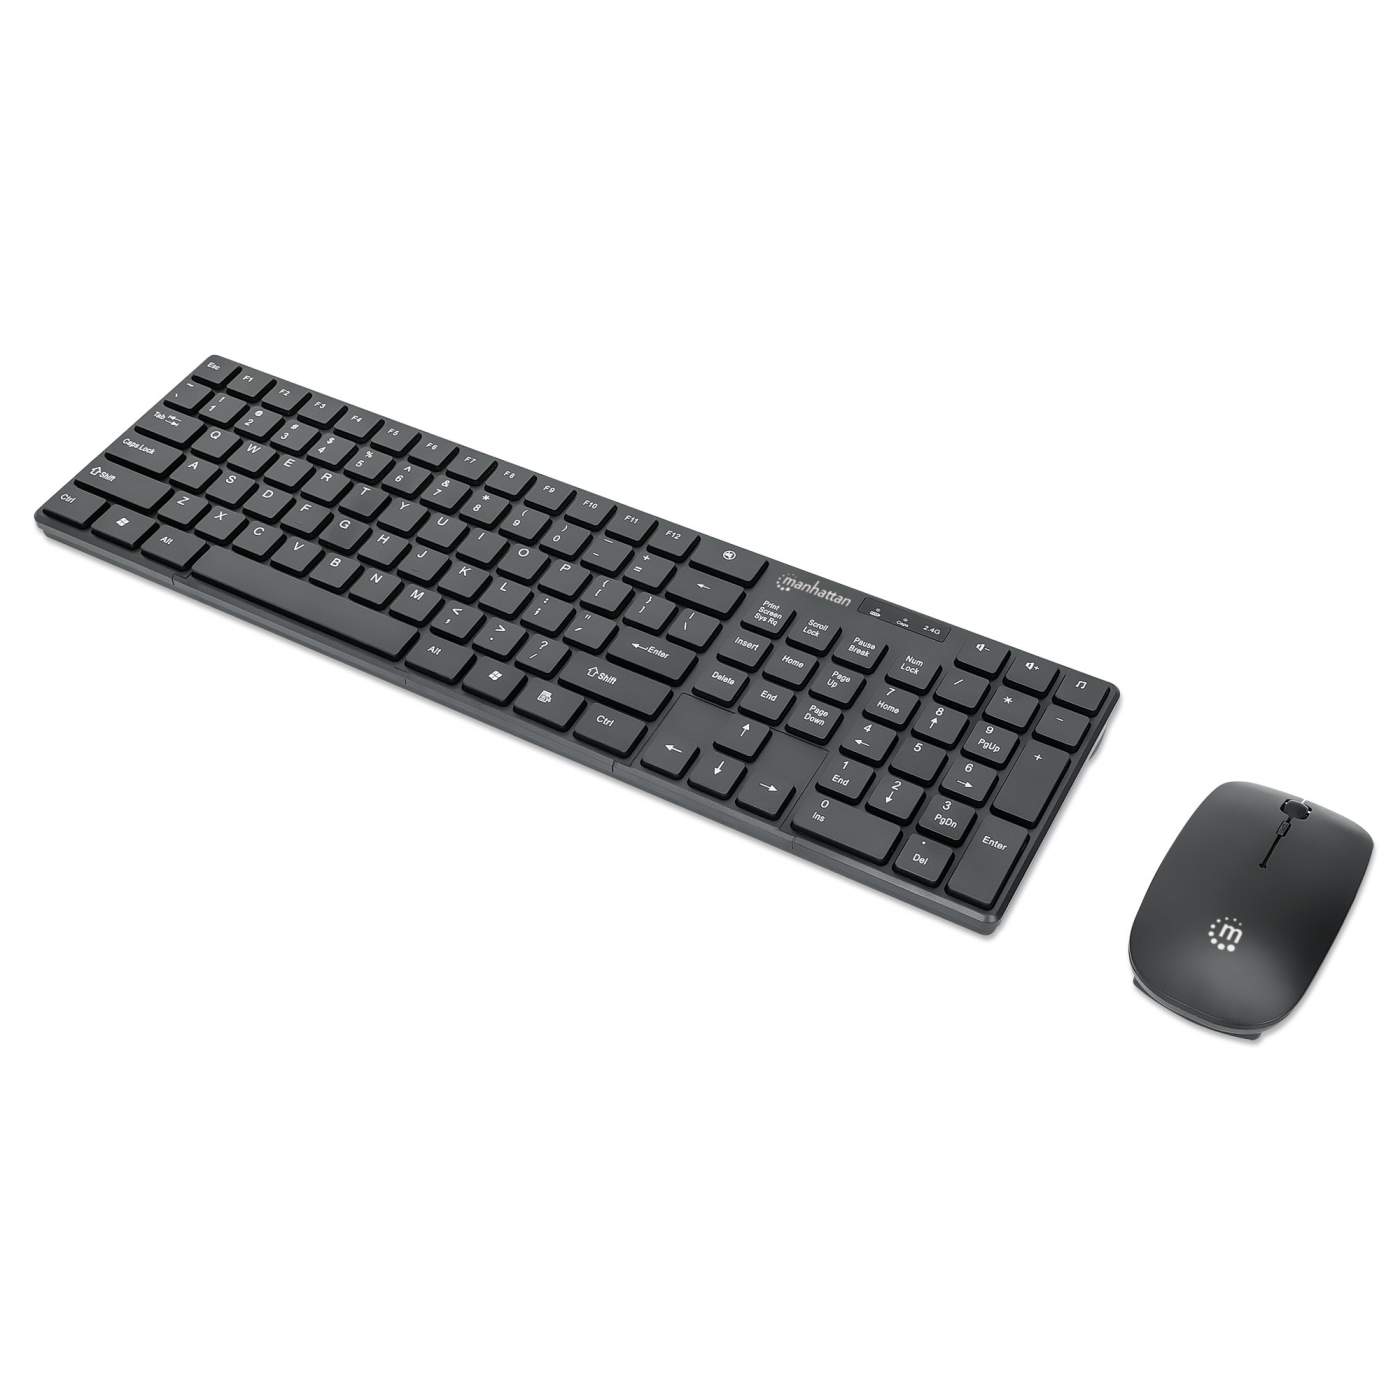 Wireless Keyboard and Optical Mouse Set Image 1